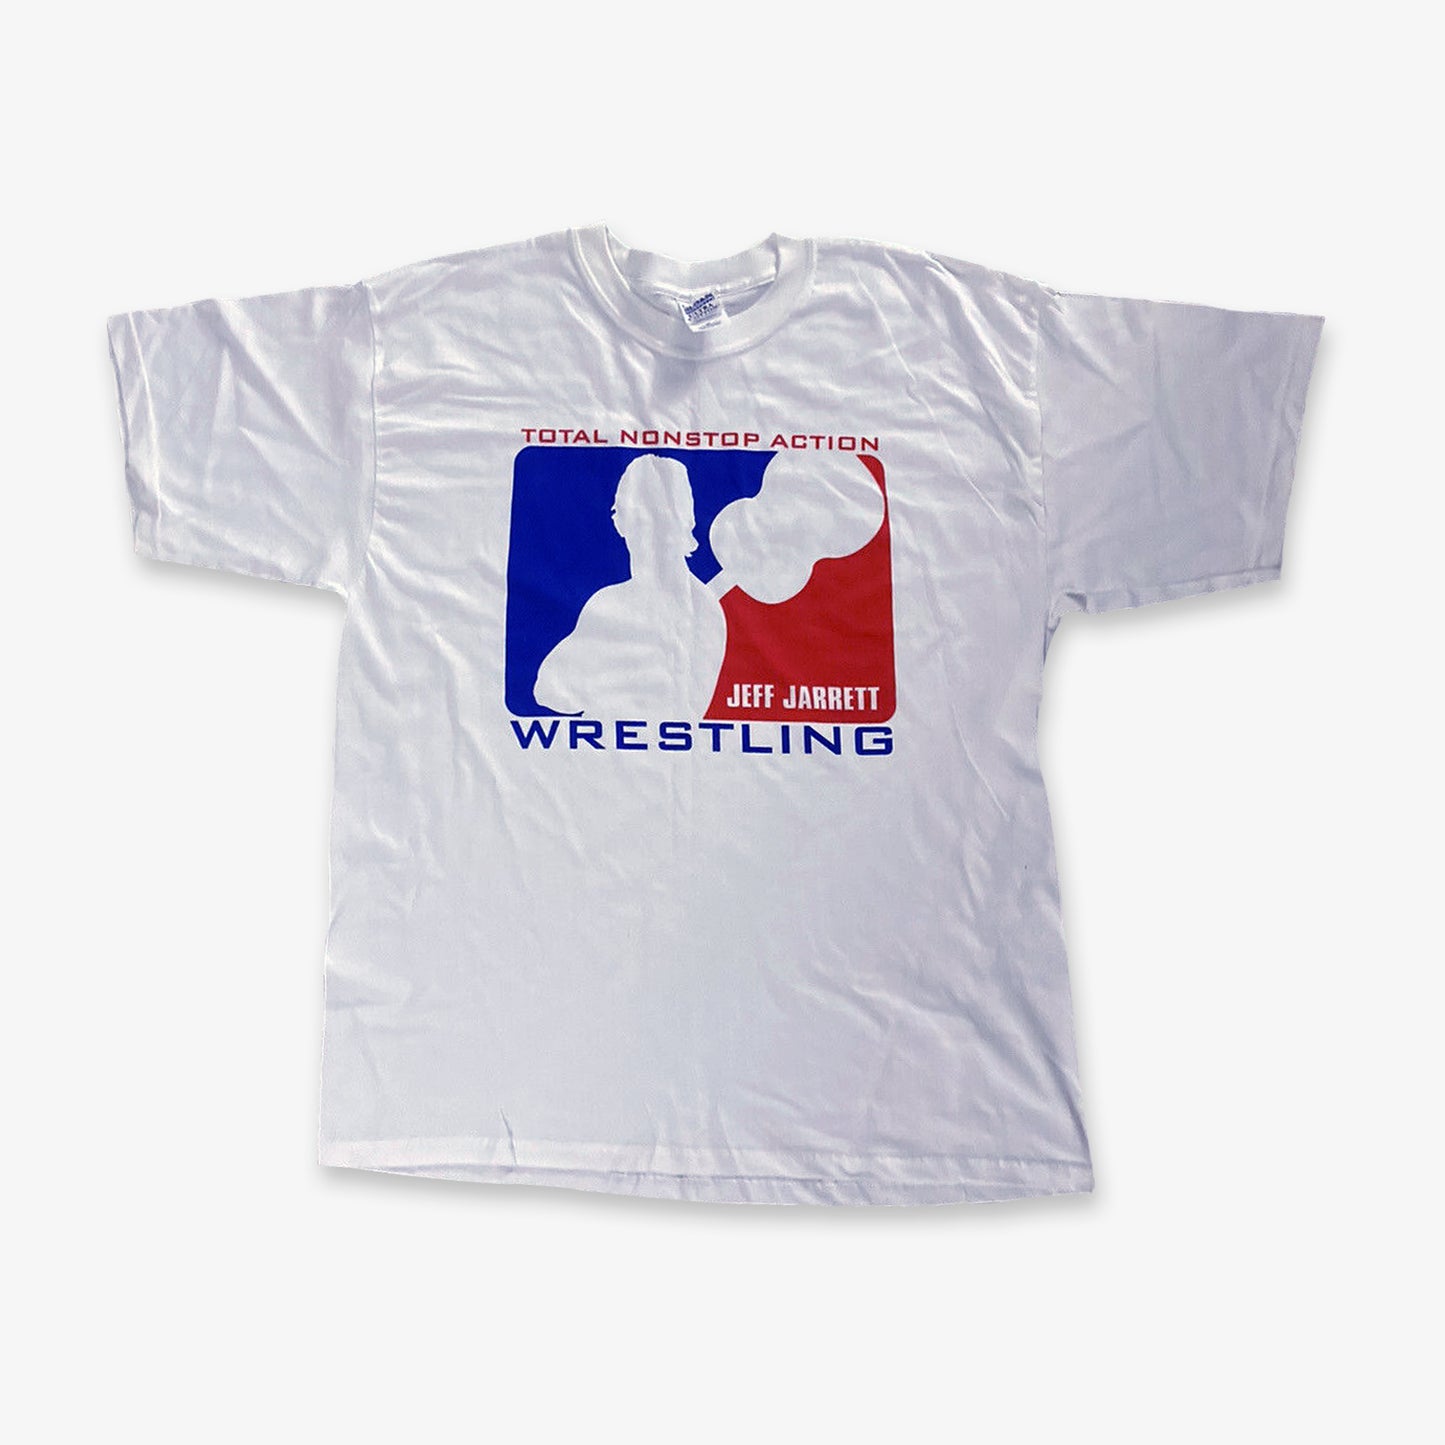 Jeff Jarrett Big League Stroke Shirt